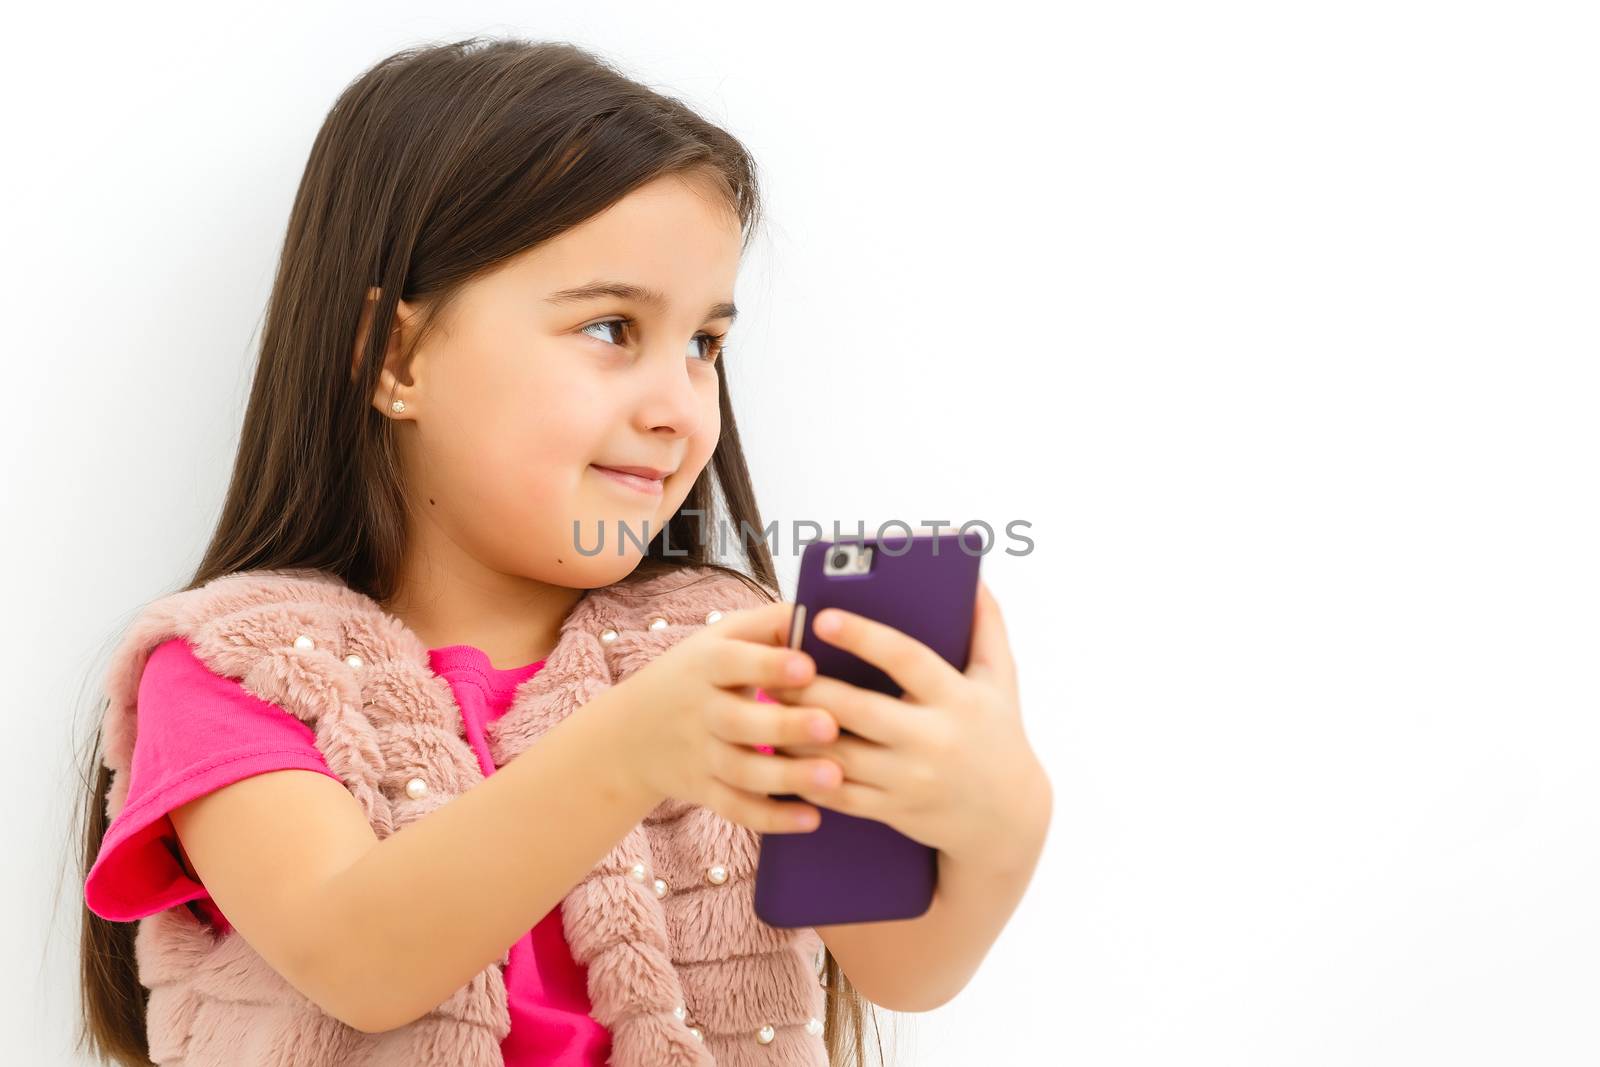 Little girl holding a smart phone against white background